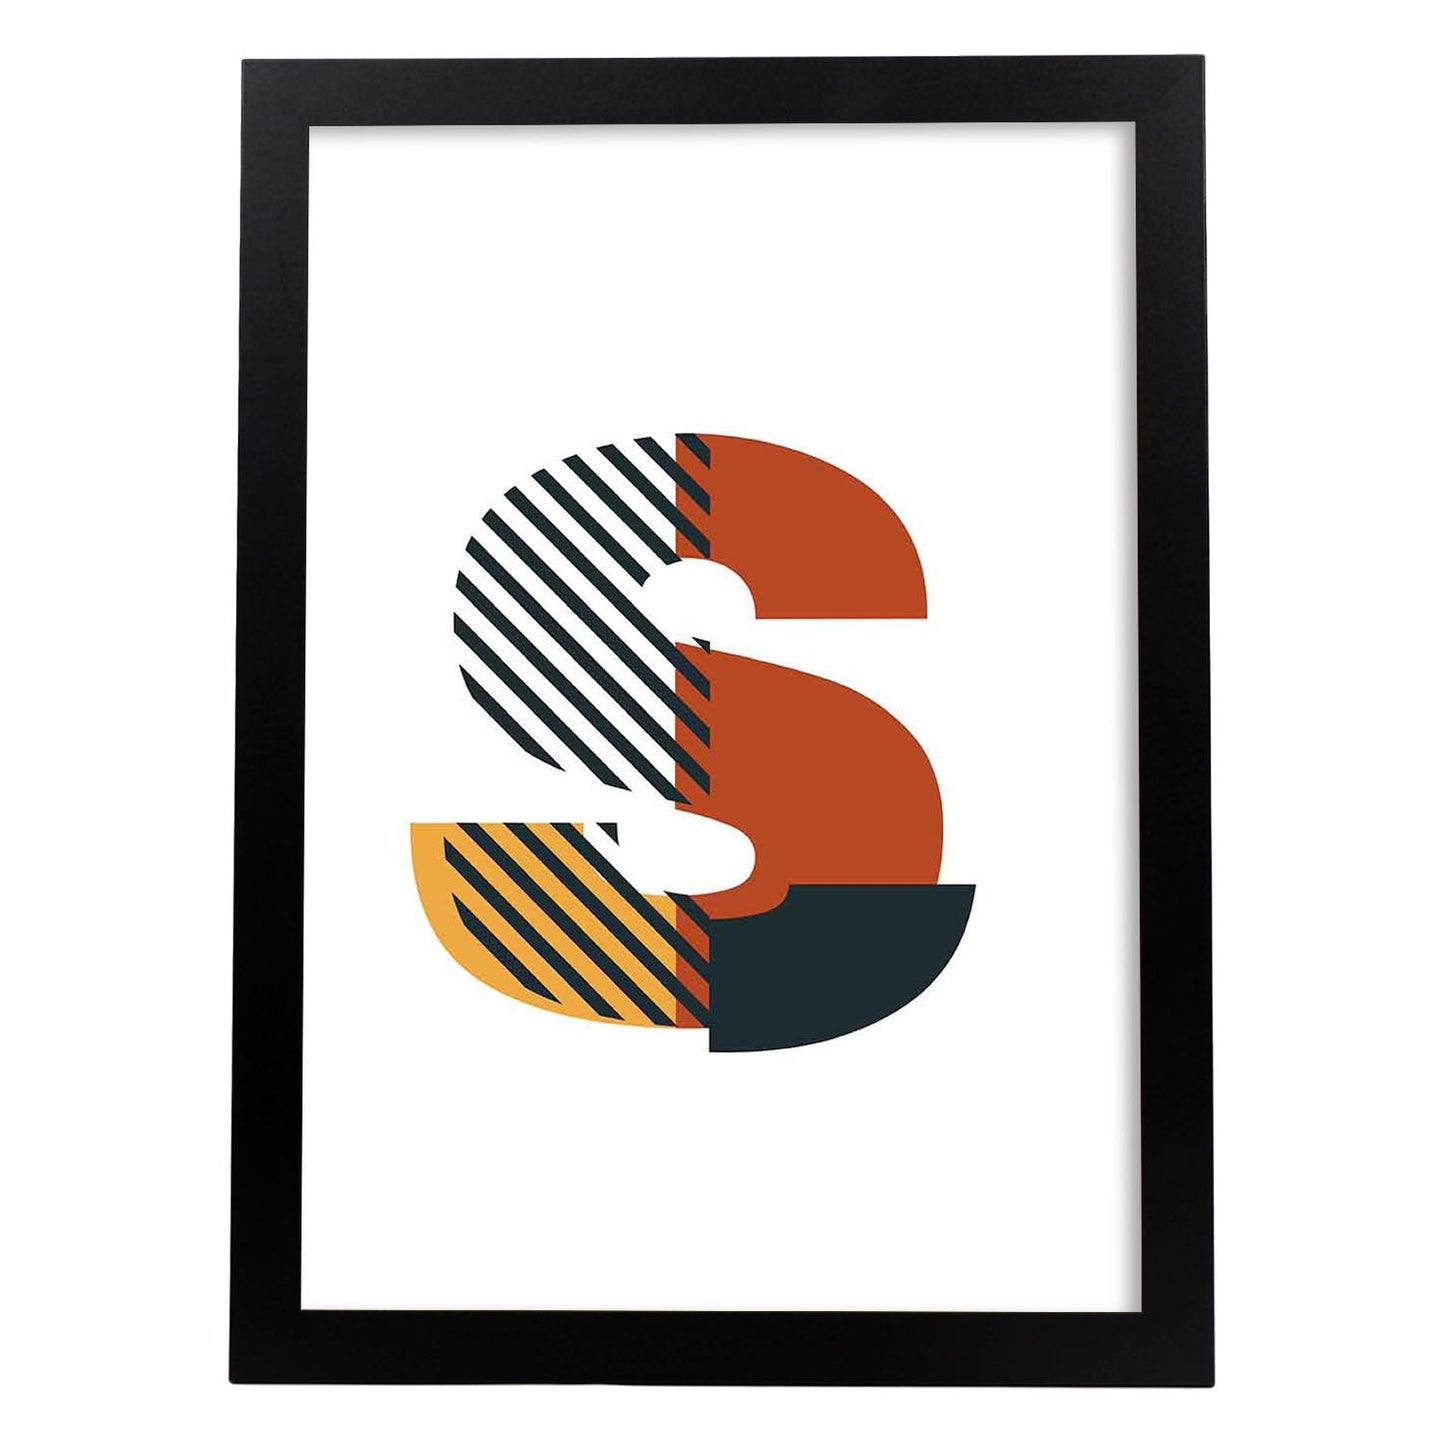 Poster de letra S. Lámina estilo Geometria con imágenes del alfabeto.-Artwork-Nacnic-A4-Marco Negro-Nacnic Estudio SL